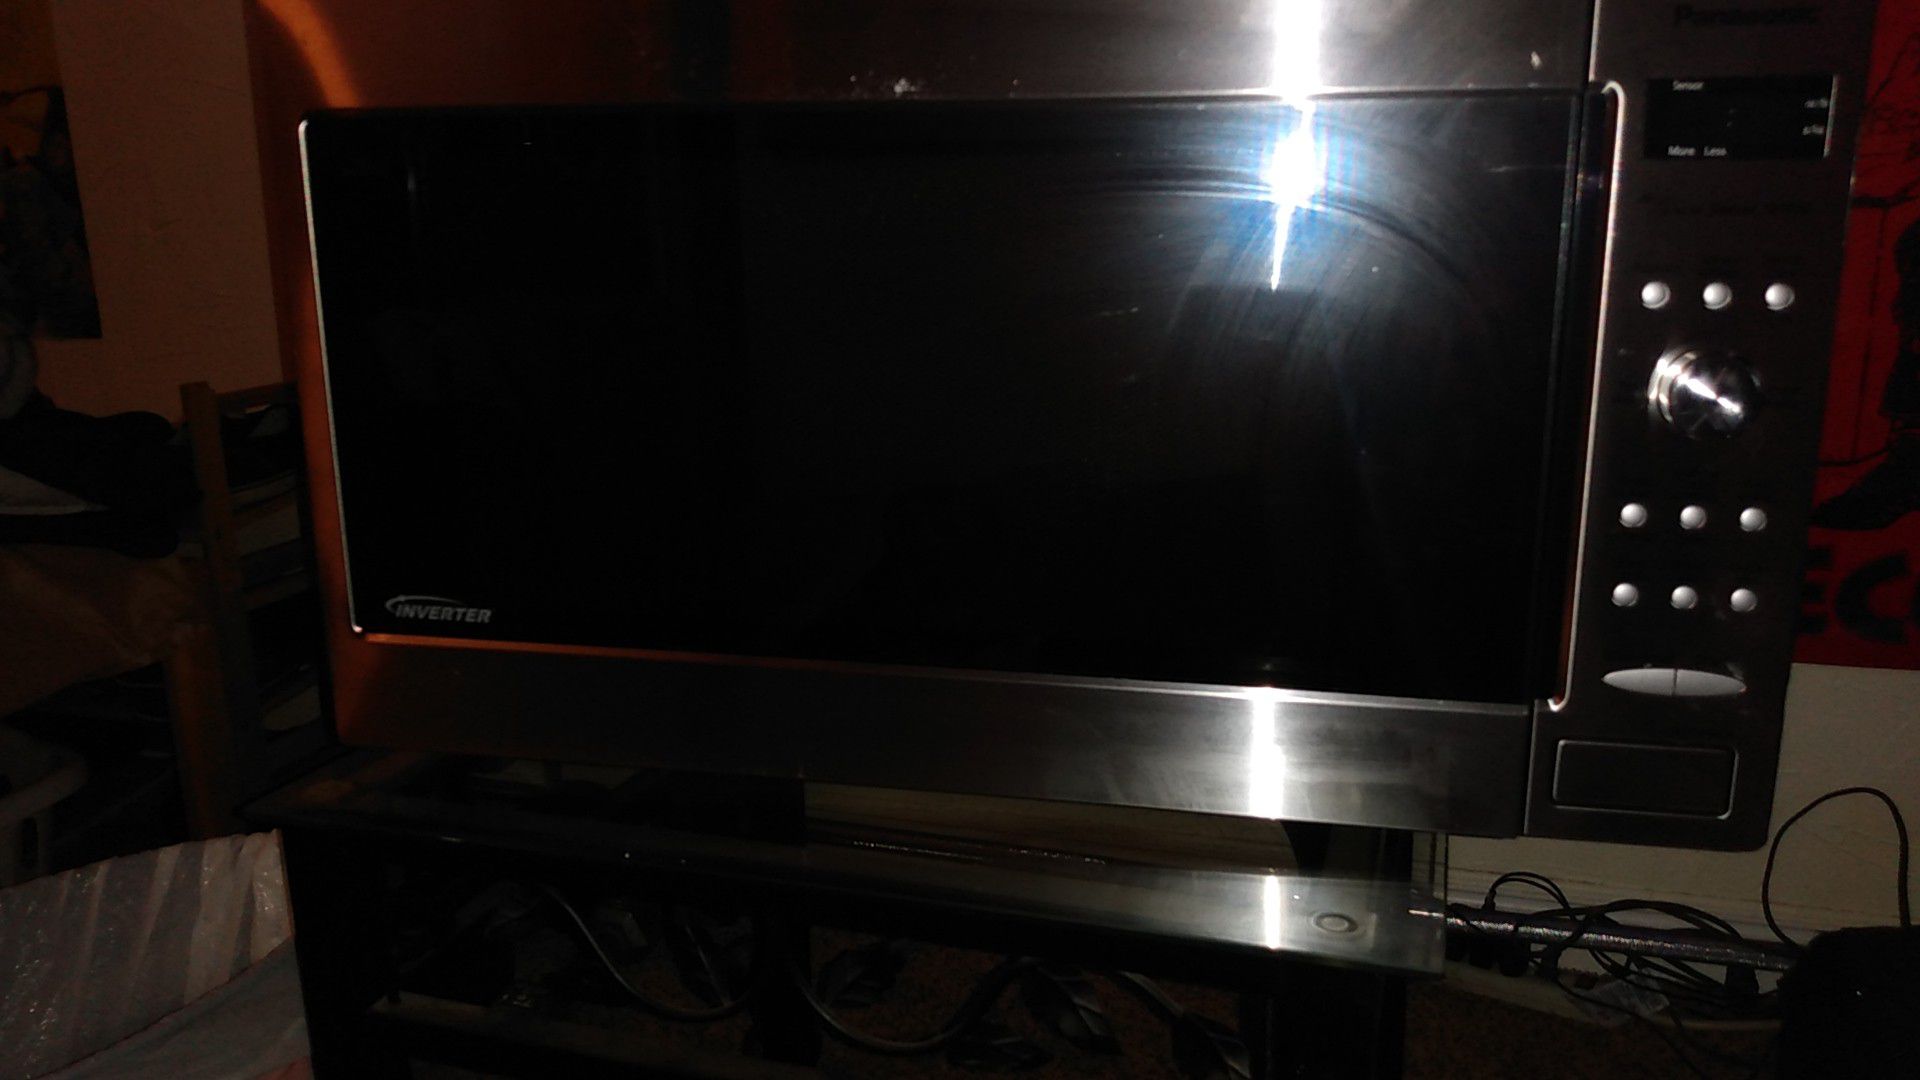 Stainless steel Panasonic inverter microwave